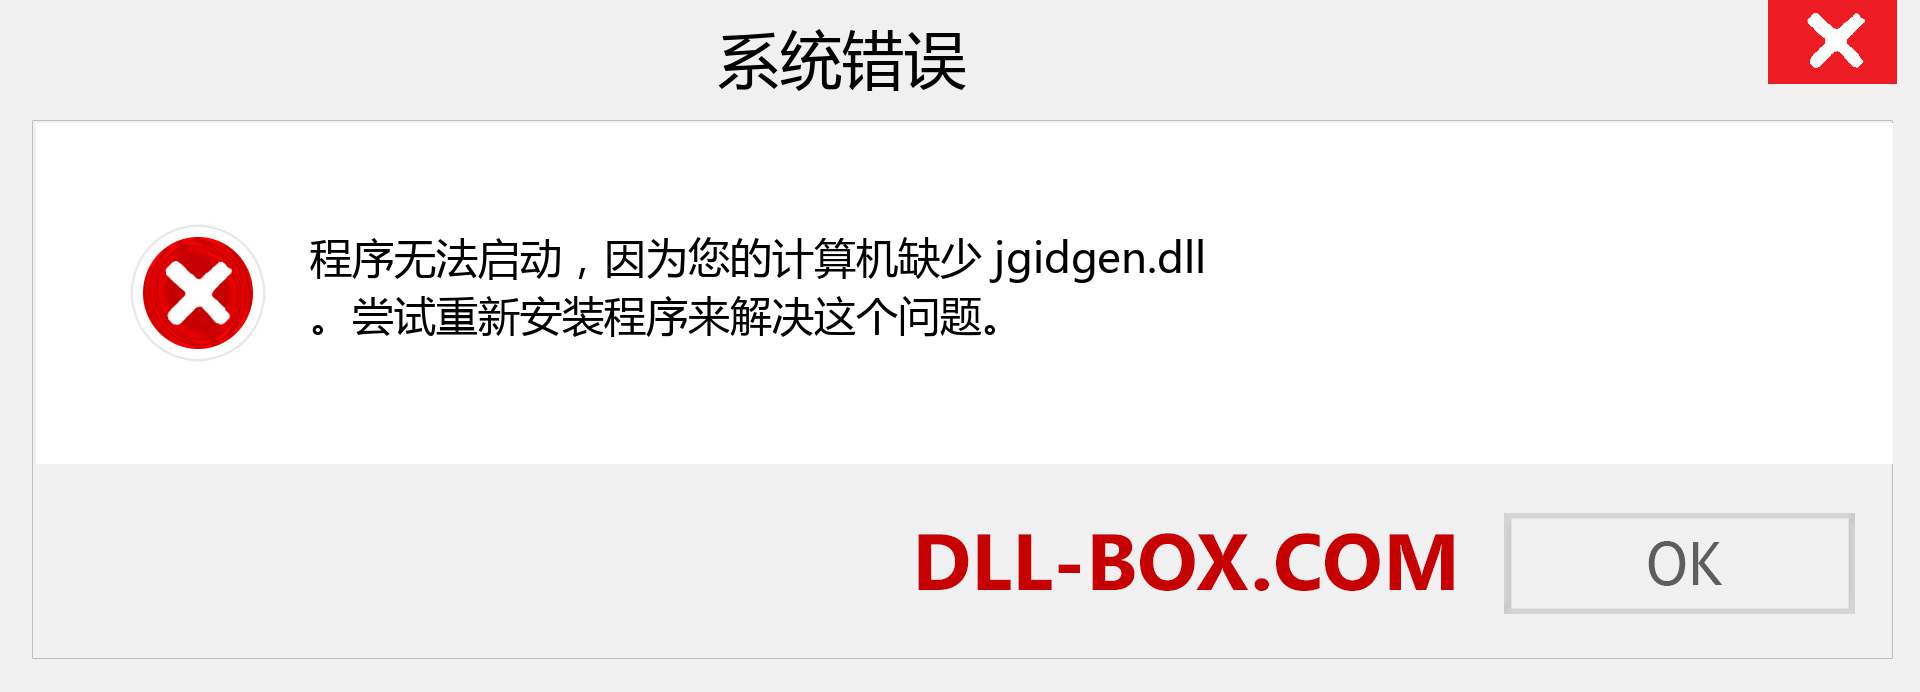 jgidgen.dll 文件丢失？。 适用于 Windows 7、8、10 的下载 - 修复 Windows、照片、图像上的 jgidgen dll 丢失错误